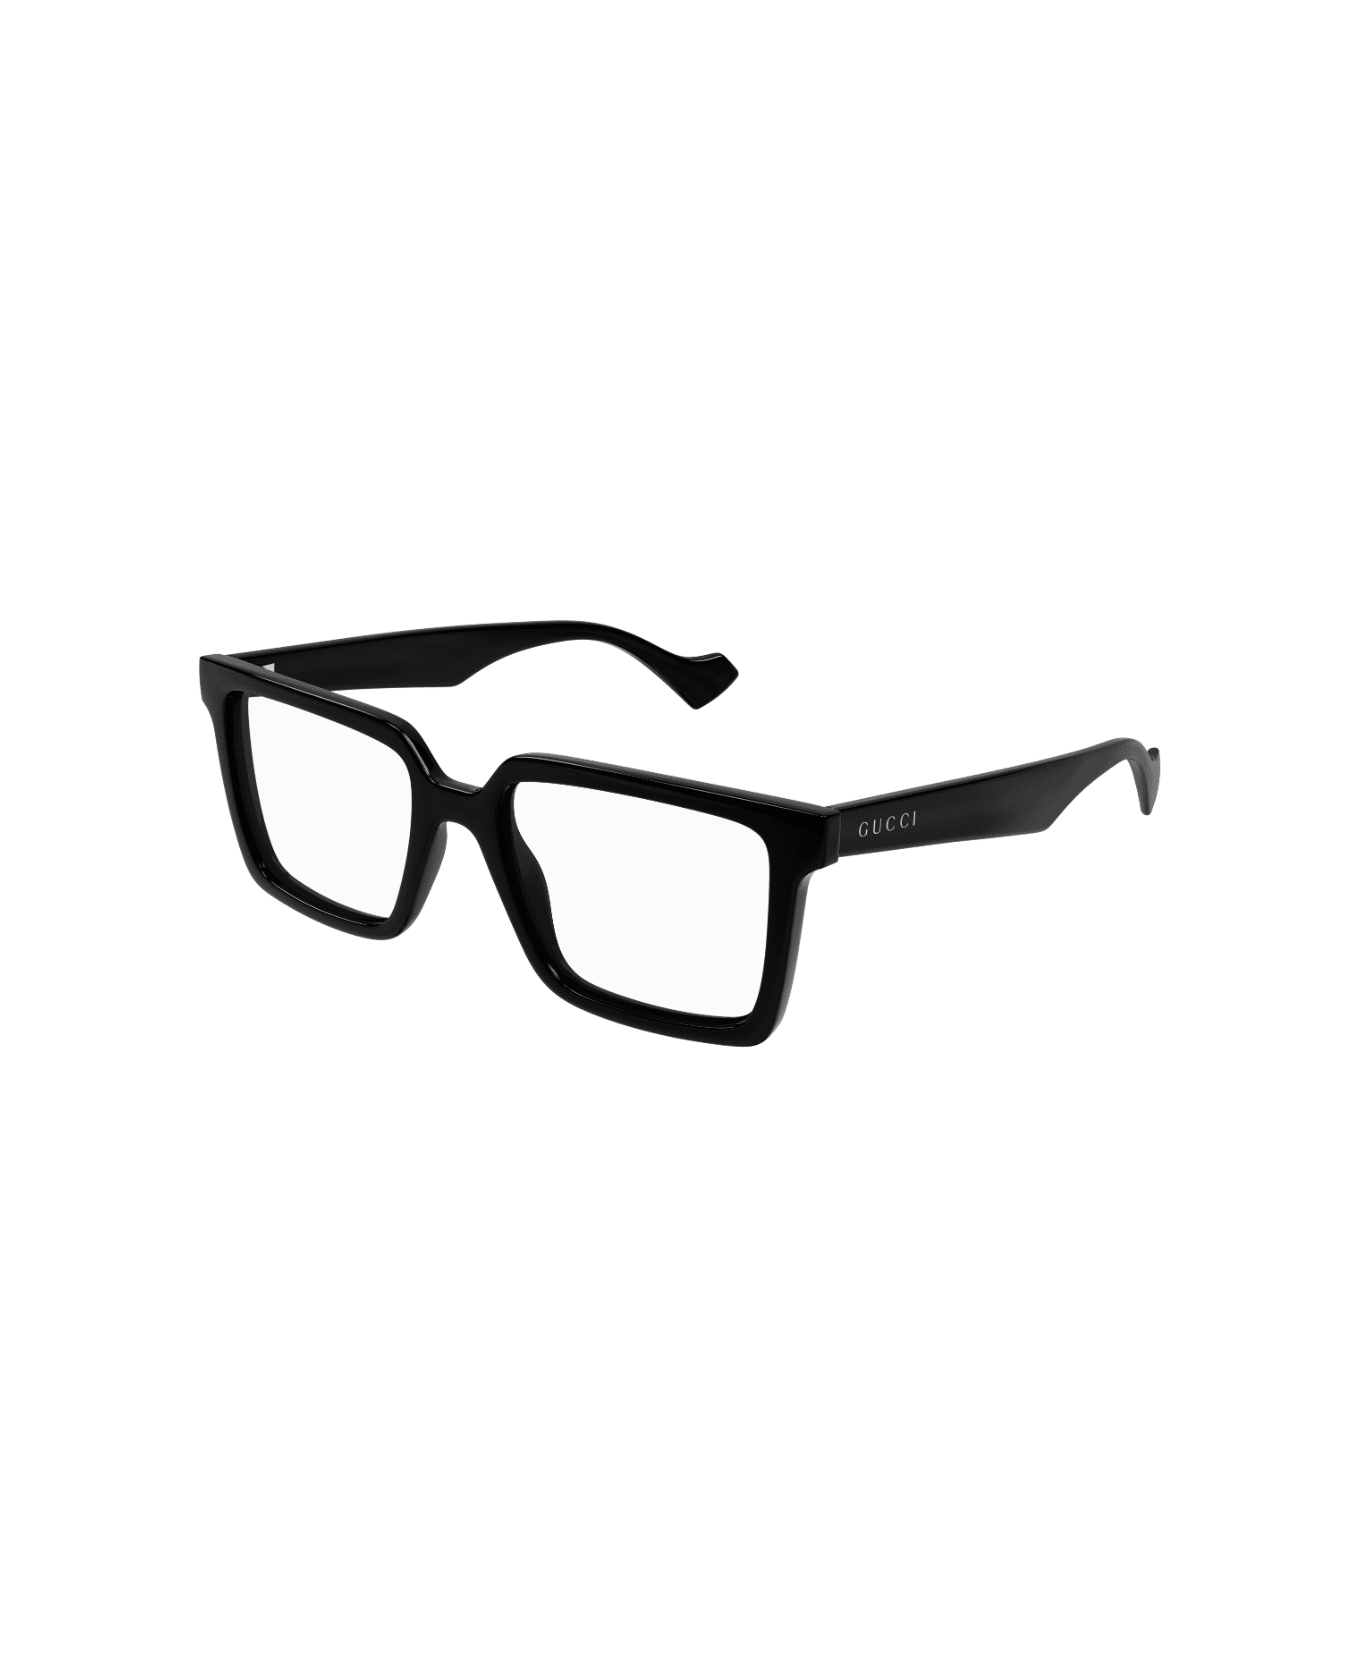 Gucci Eyewear GG1540-001 Glasses - Nero アイウェア